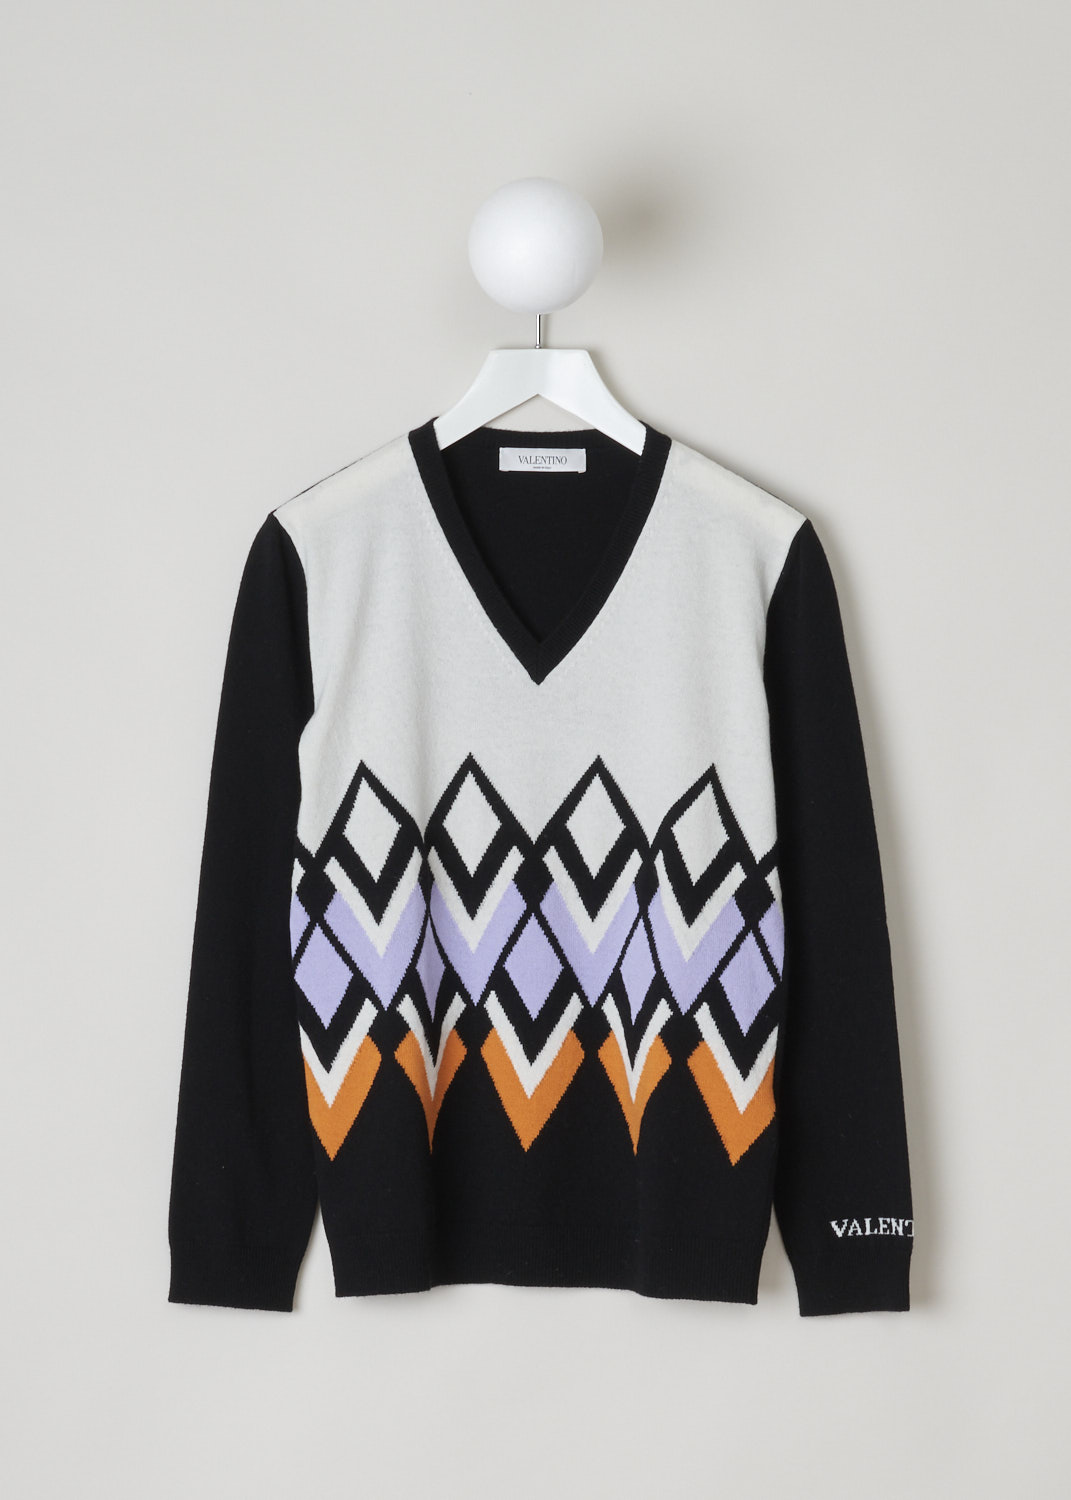 Valentino, Multi-colored argyle pattern sweater, UB3KC15S5N8_K92, black white orange, front. A black sweater, coloured white on the front which is decorated with a lovely multi-colored argyle patter. Featuring a v-shaped neckline and long sleeves.